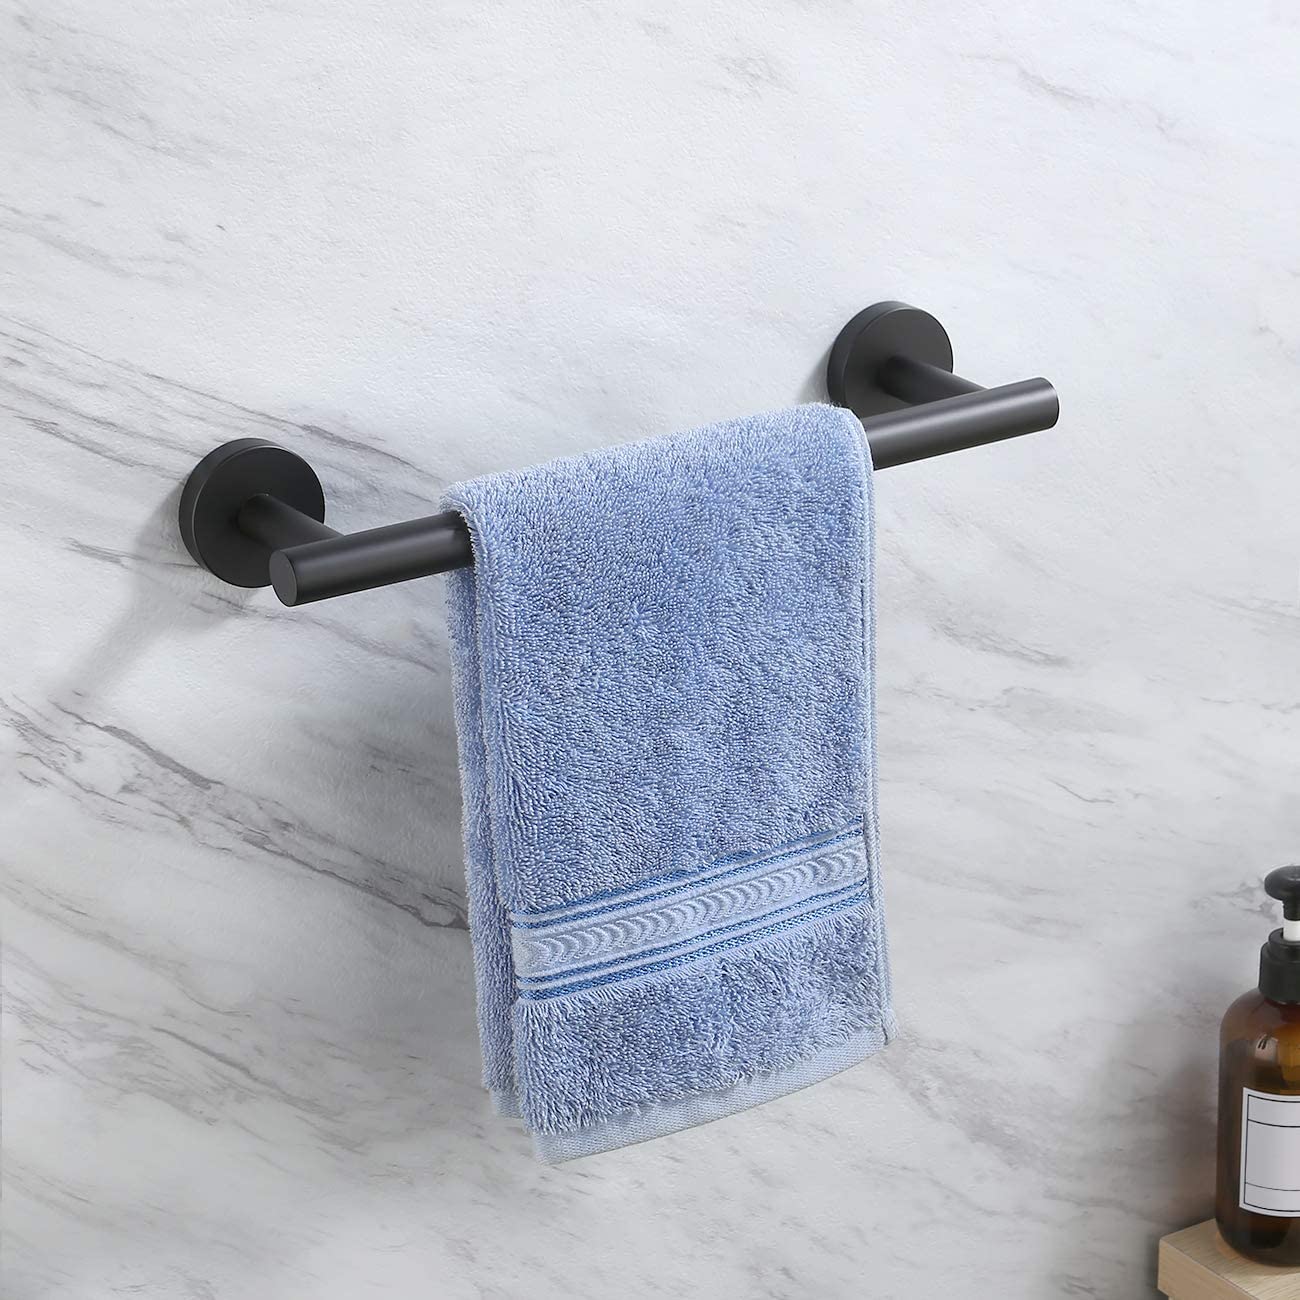 KES 12 Inches Matte Black Hand Towel Bar Bathroom Towel Holder - e4cents